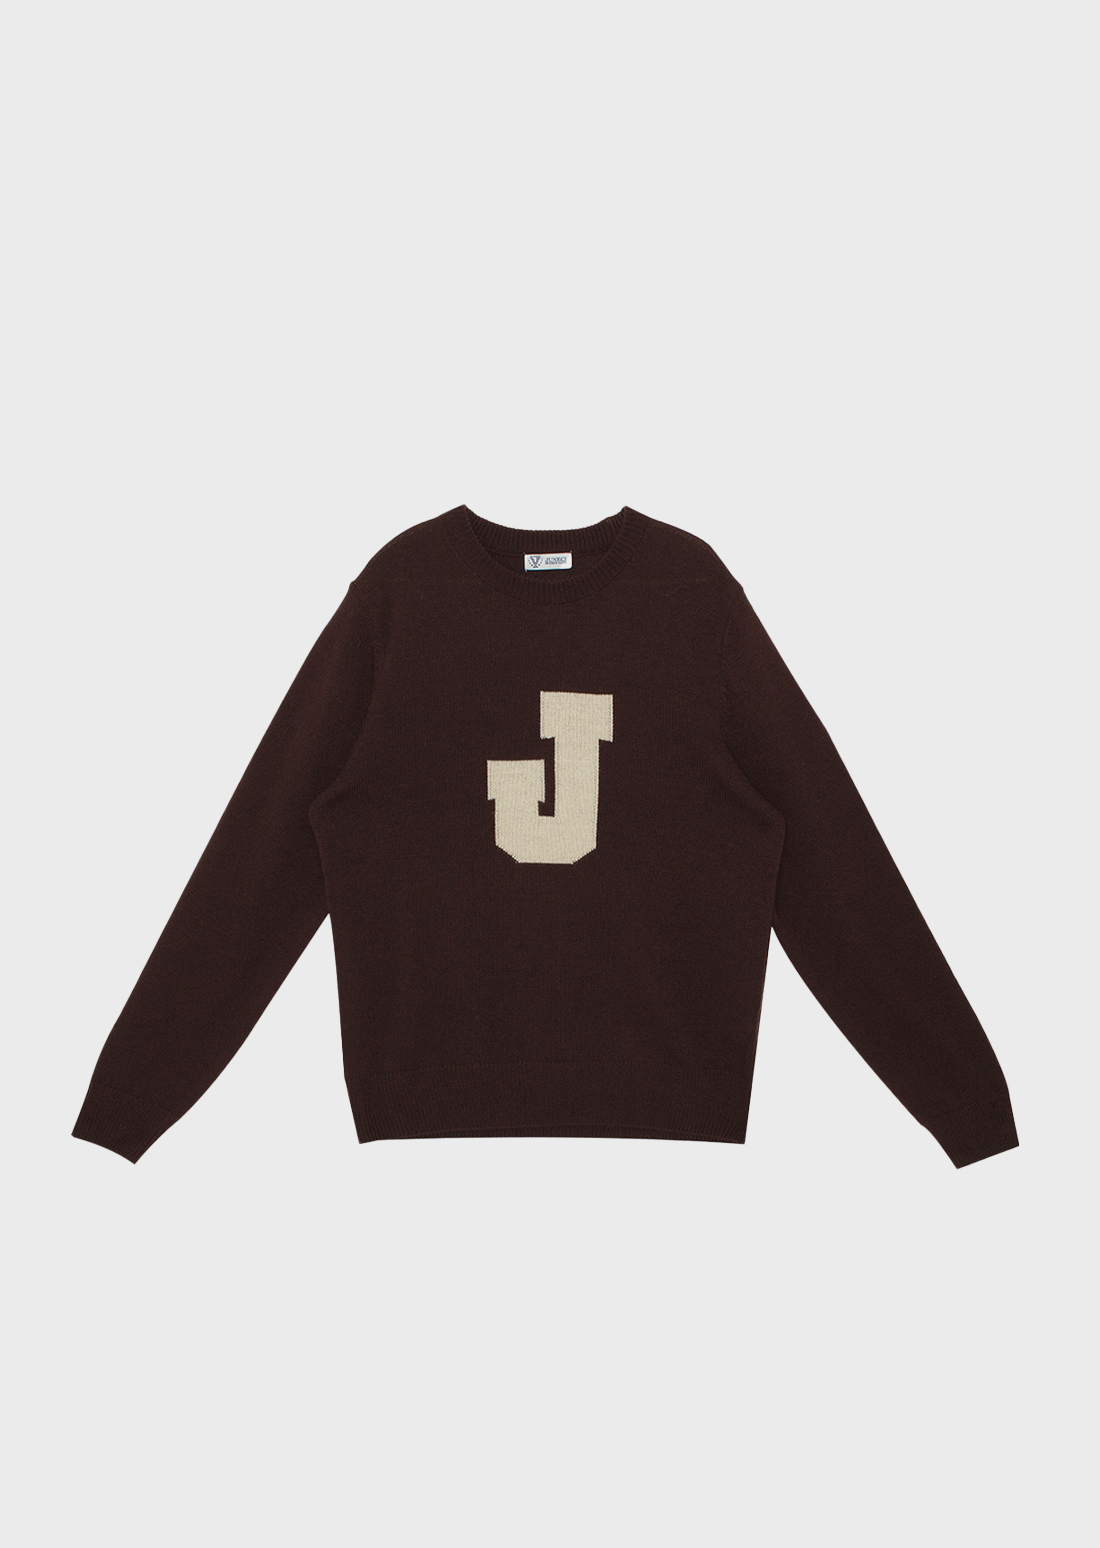 J Initial merino-wool knitwear (Brown)